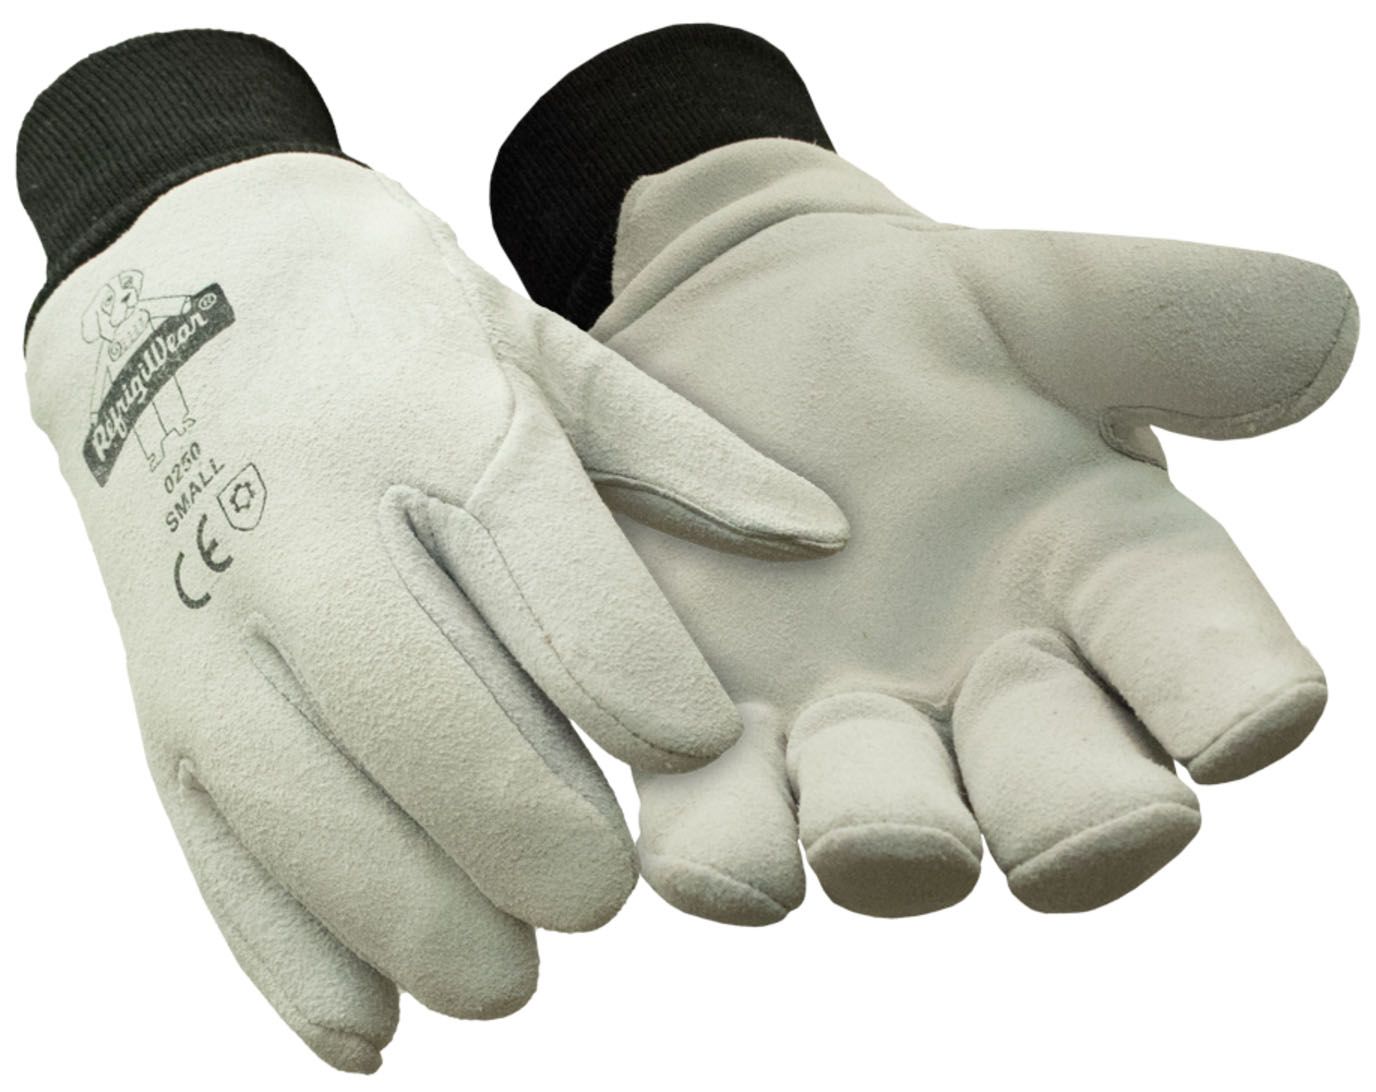 Refrigiwear Waterproof Insulated High Dexterity Gloves Black Medium